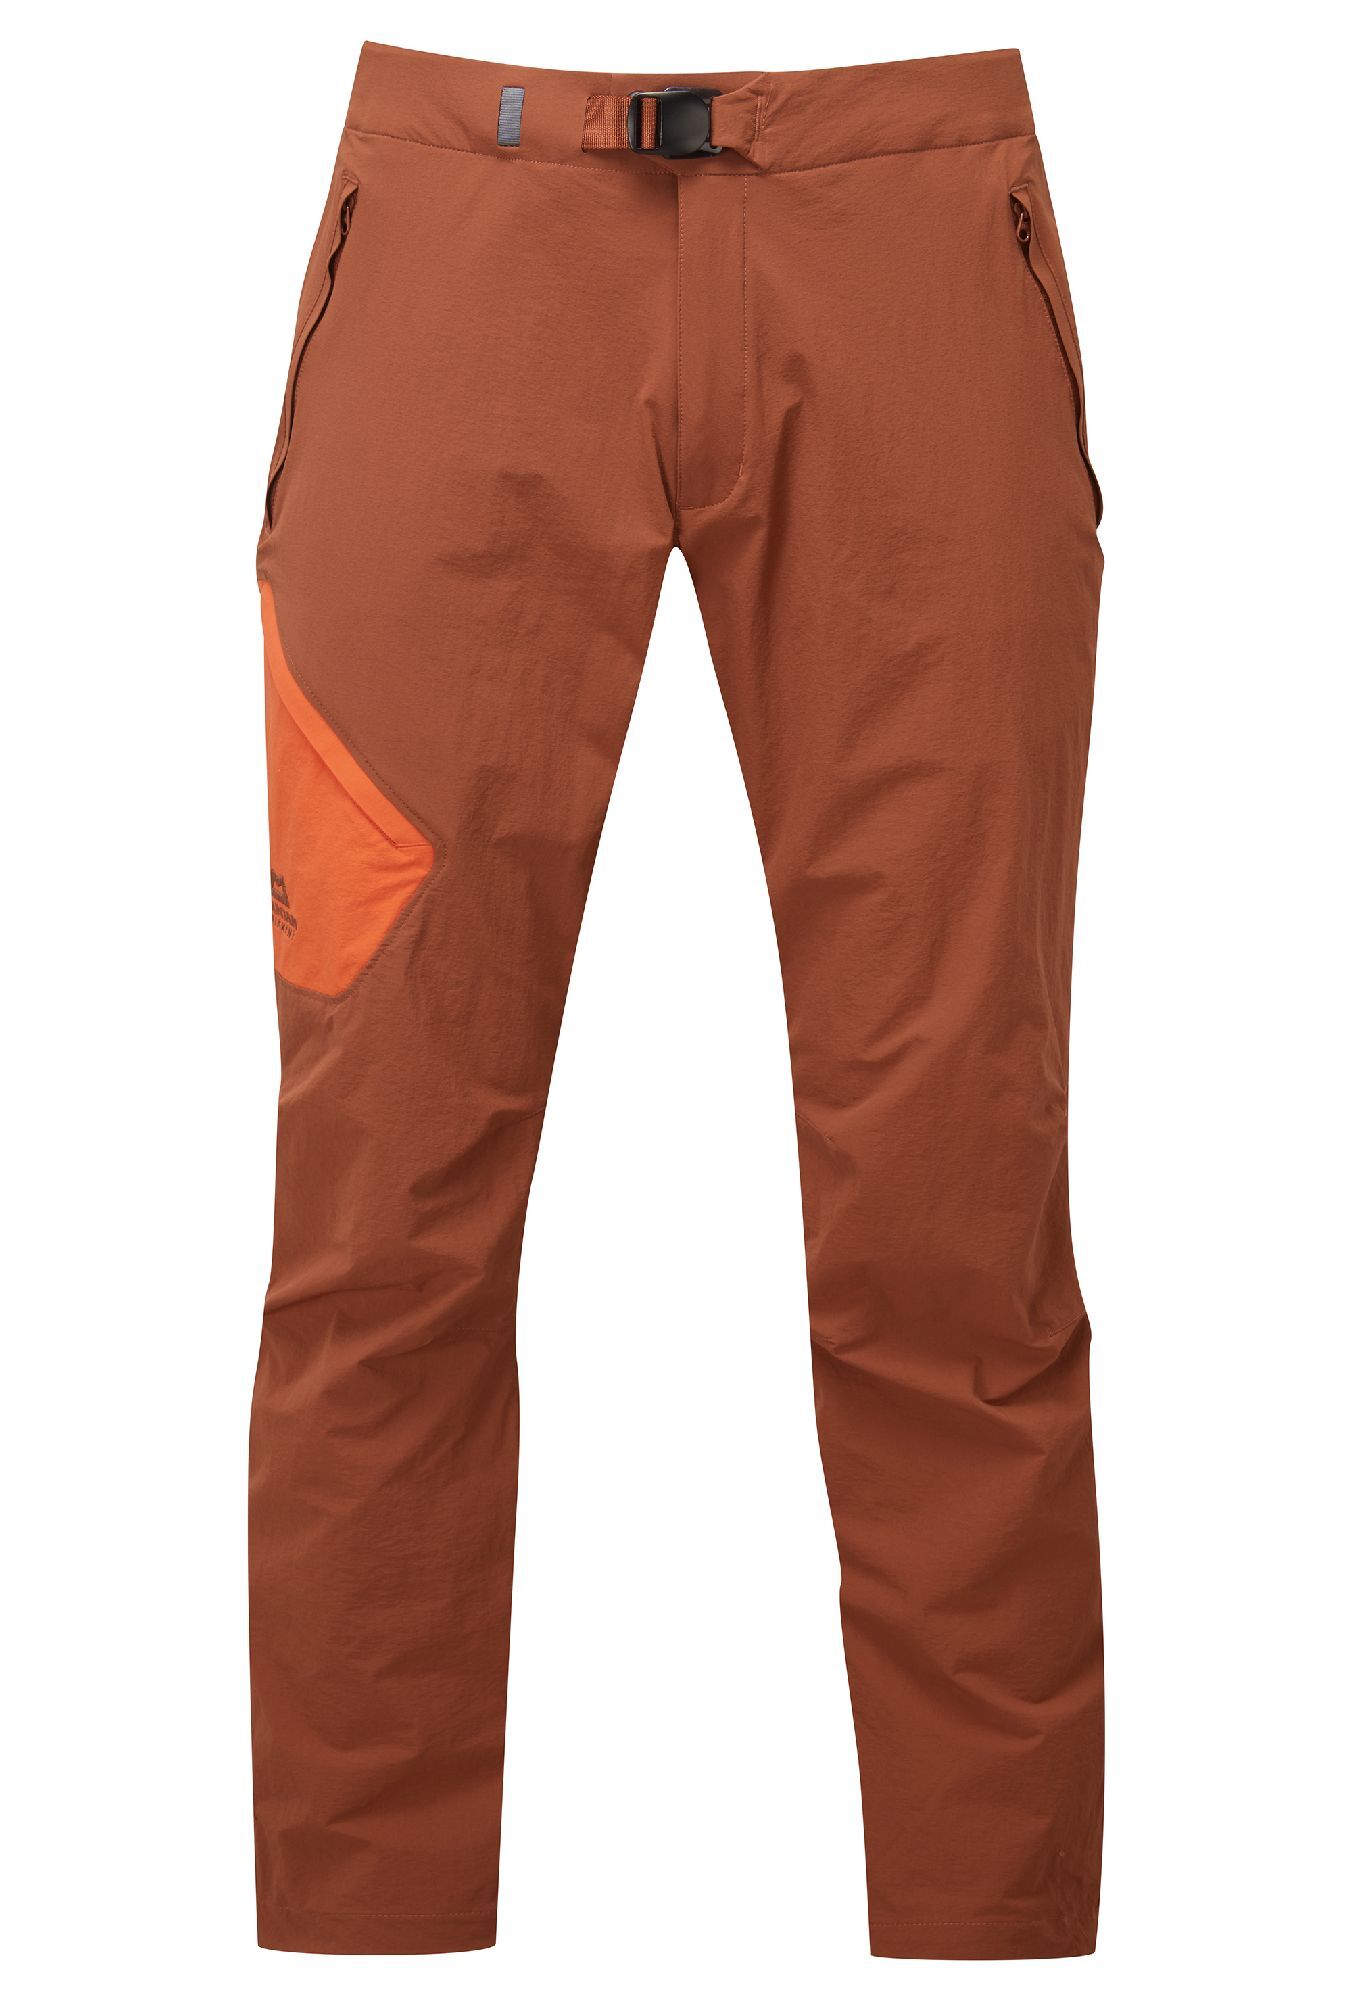 Mountain Equipment Comici 2 Pant - Climbing trousers - Men's | Hardloop